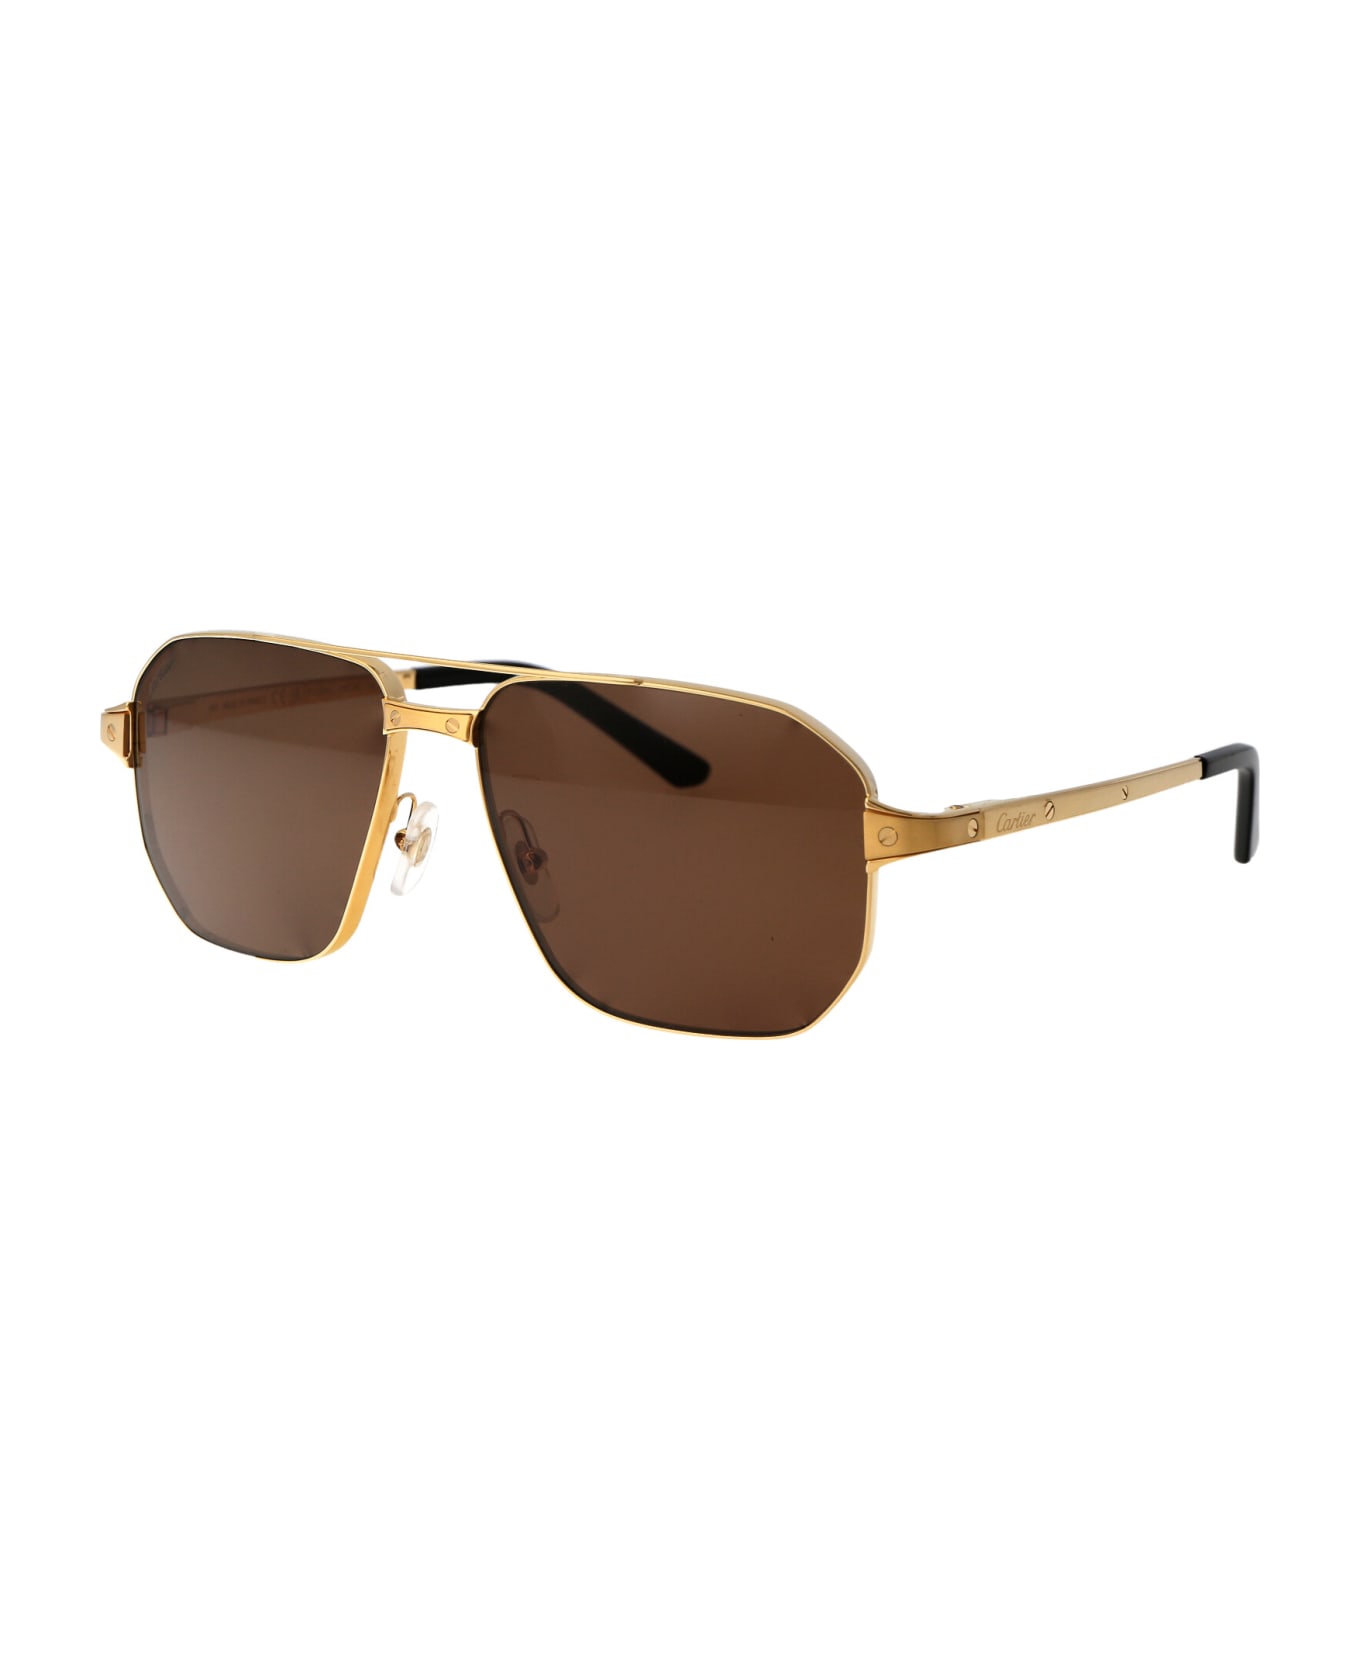 Cartier Eyewear Ct0424s Sunglasses - 003 GOLD GOLD BROWN